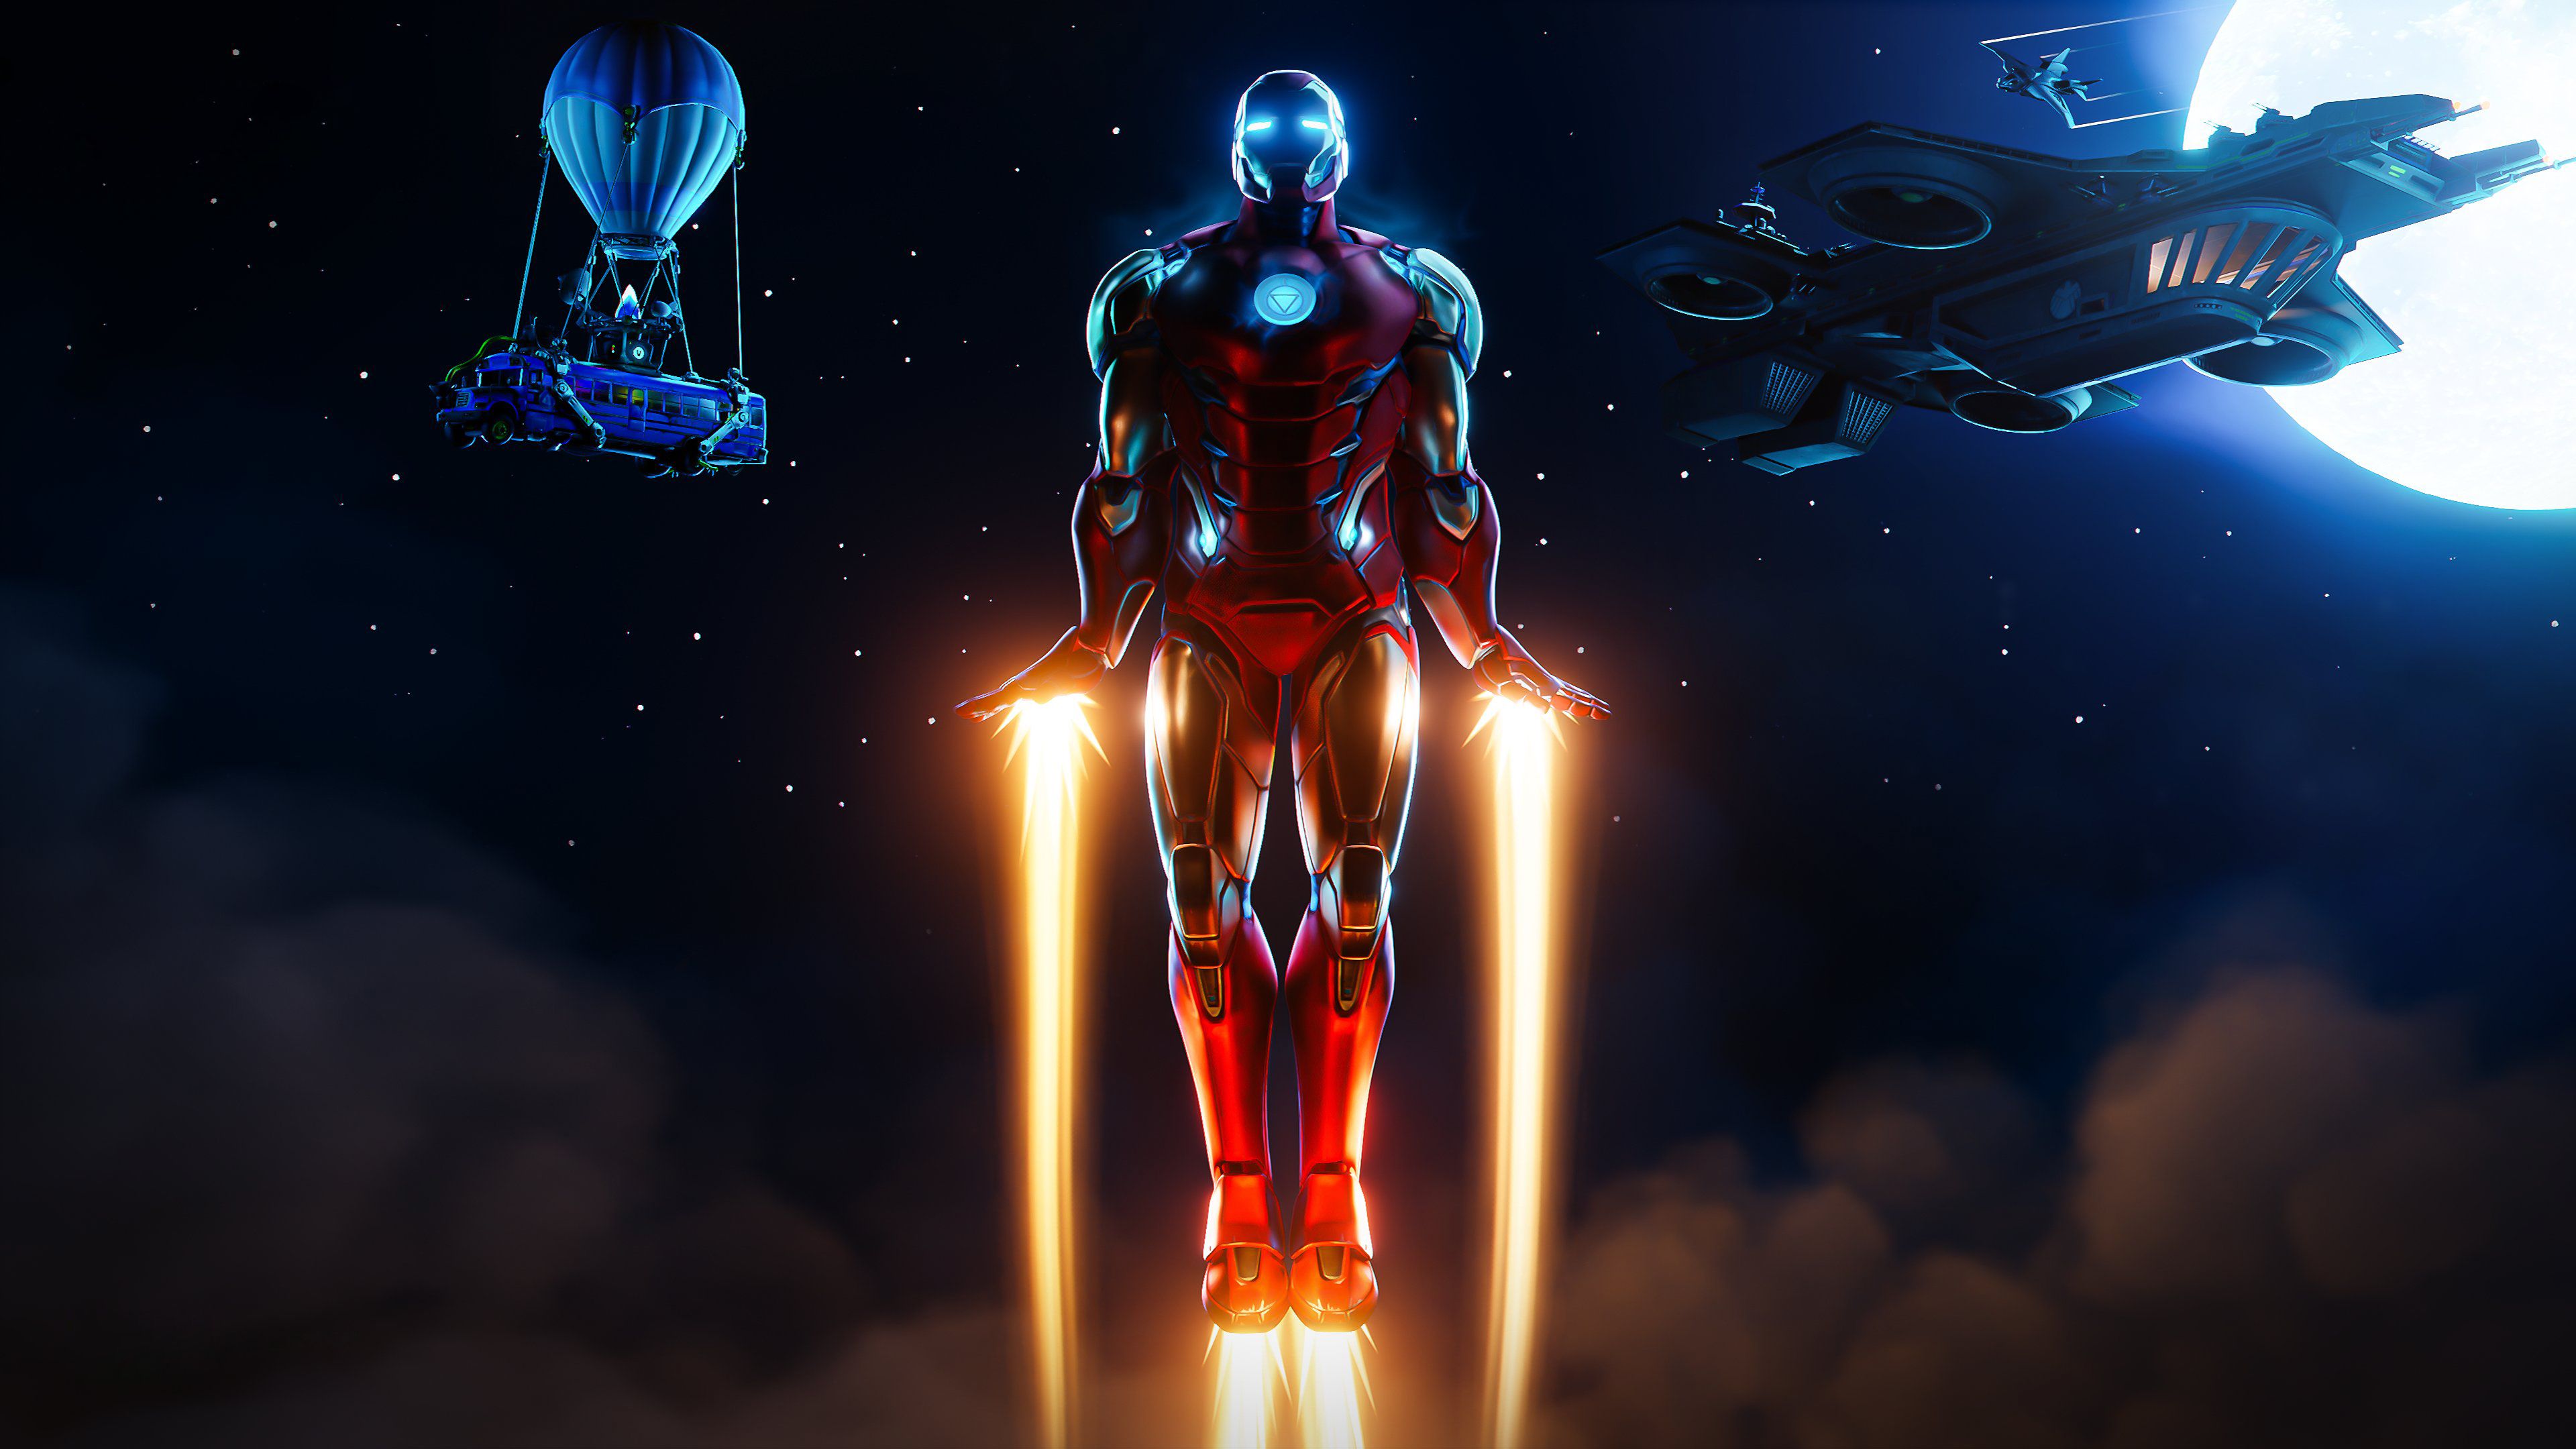 Iron Man Fortnite 1080P Laptop Full HD Wallpaper, HD Games 4K Wallpaper, Image, Photo and Background